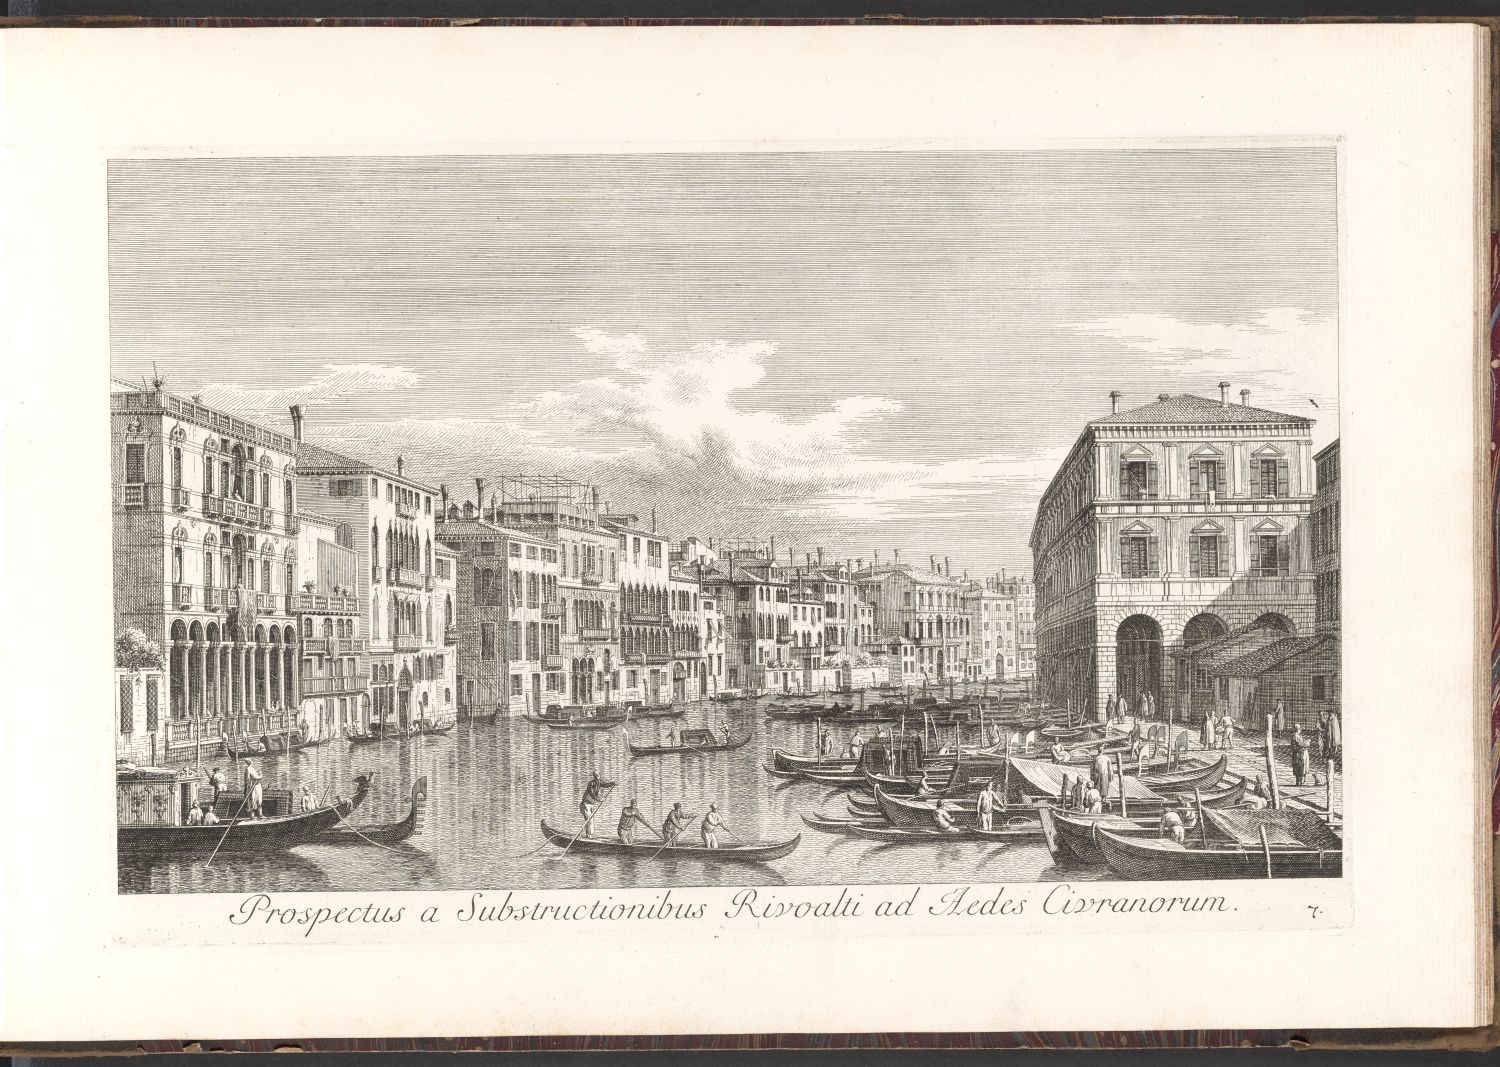 Venedig, 7. Prospectus a Substructionibus Rivoalti ad Aedes Civranorum. (Stiftung Händelhaus, Halle CC BY-NC-SA)